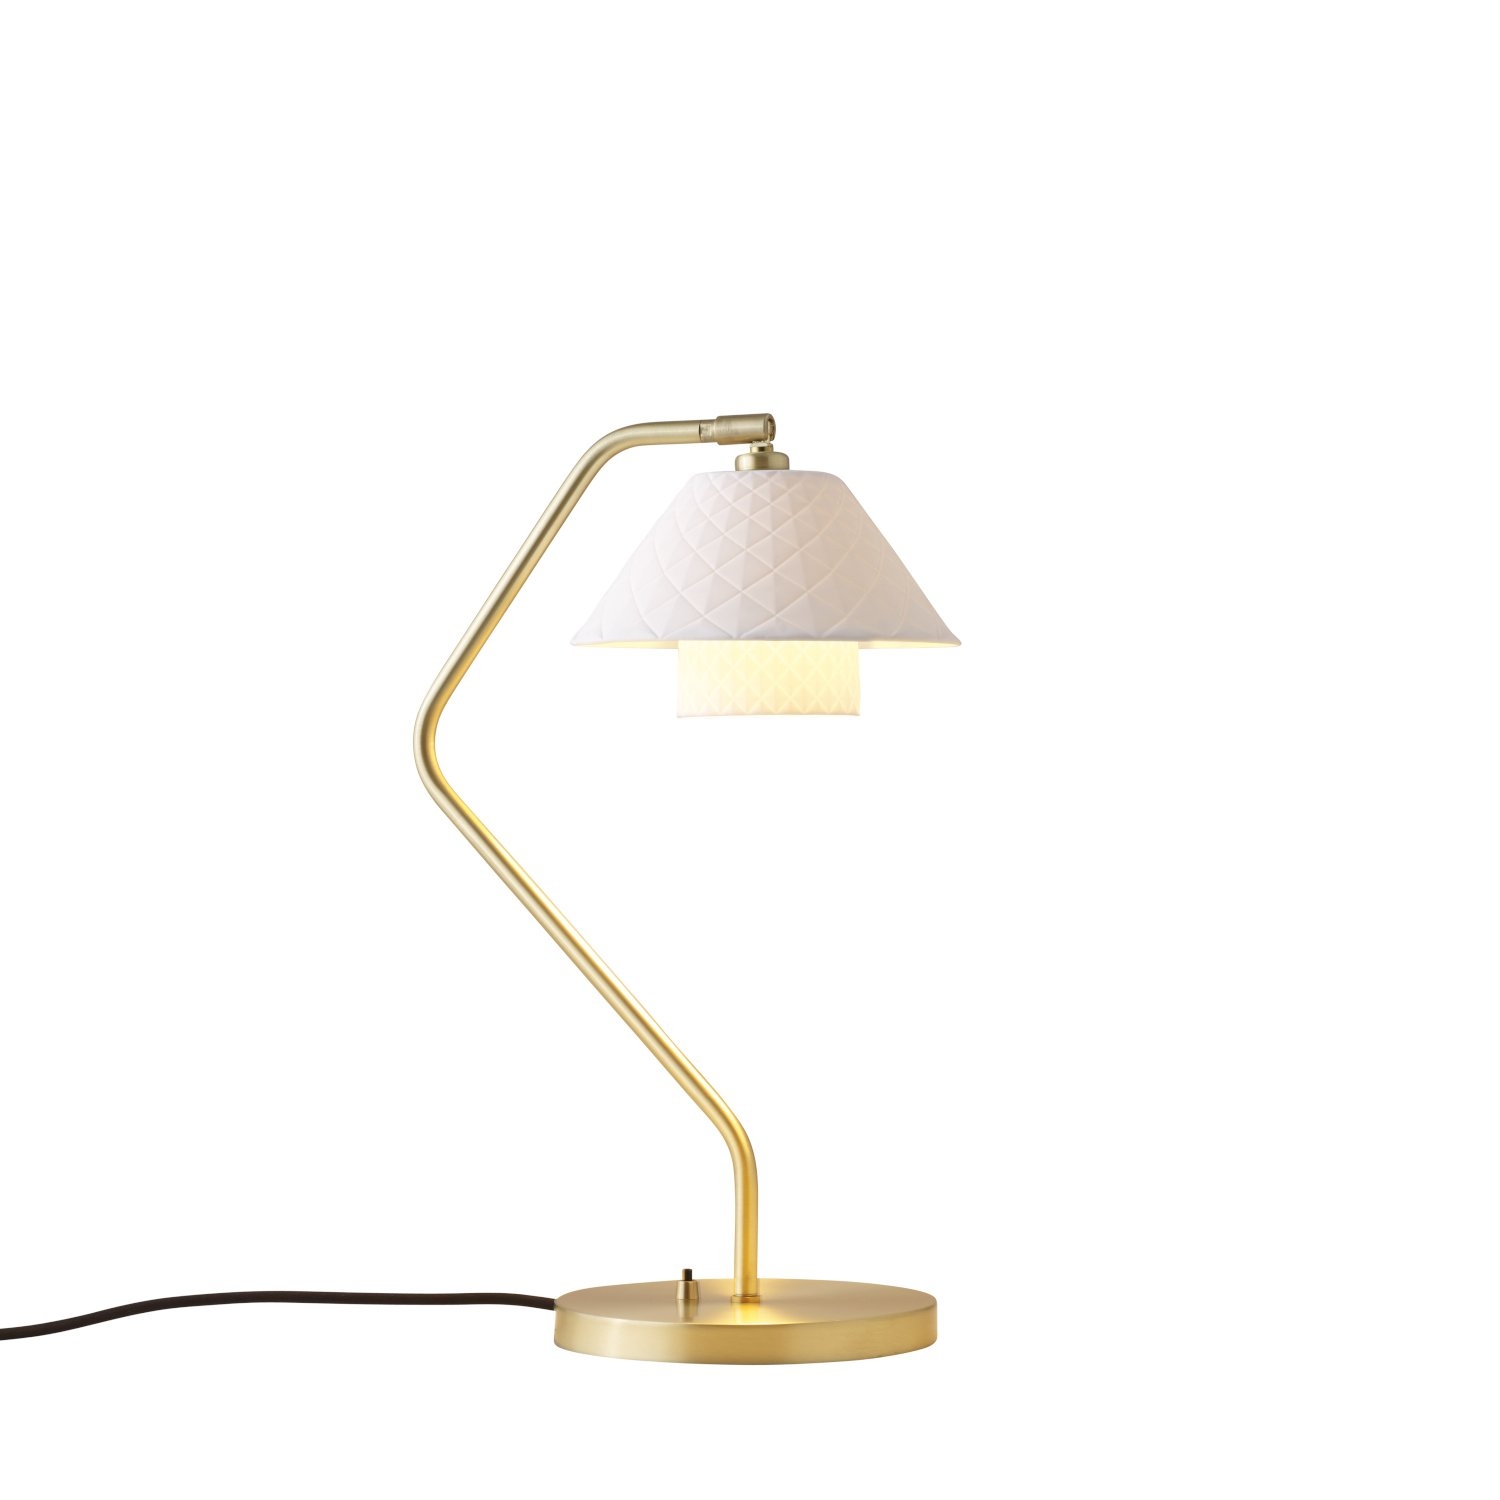 Original Btc – Oxford Double Desk Light – Natural White & Satin Brass 325 X 205 X 500 X 205 mm